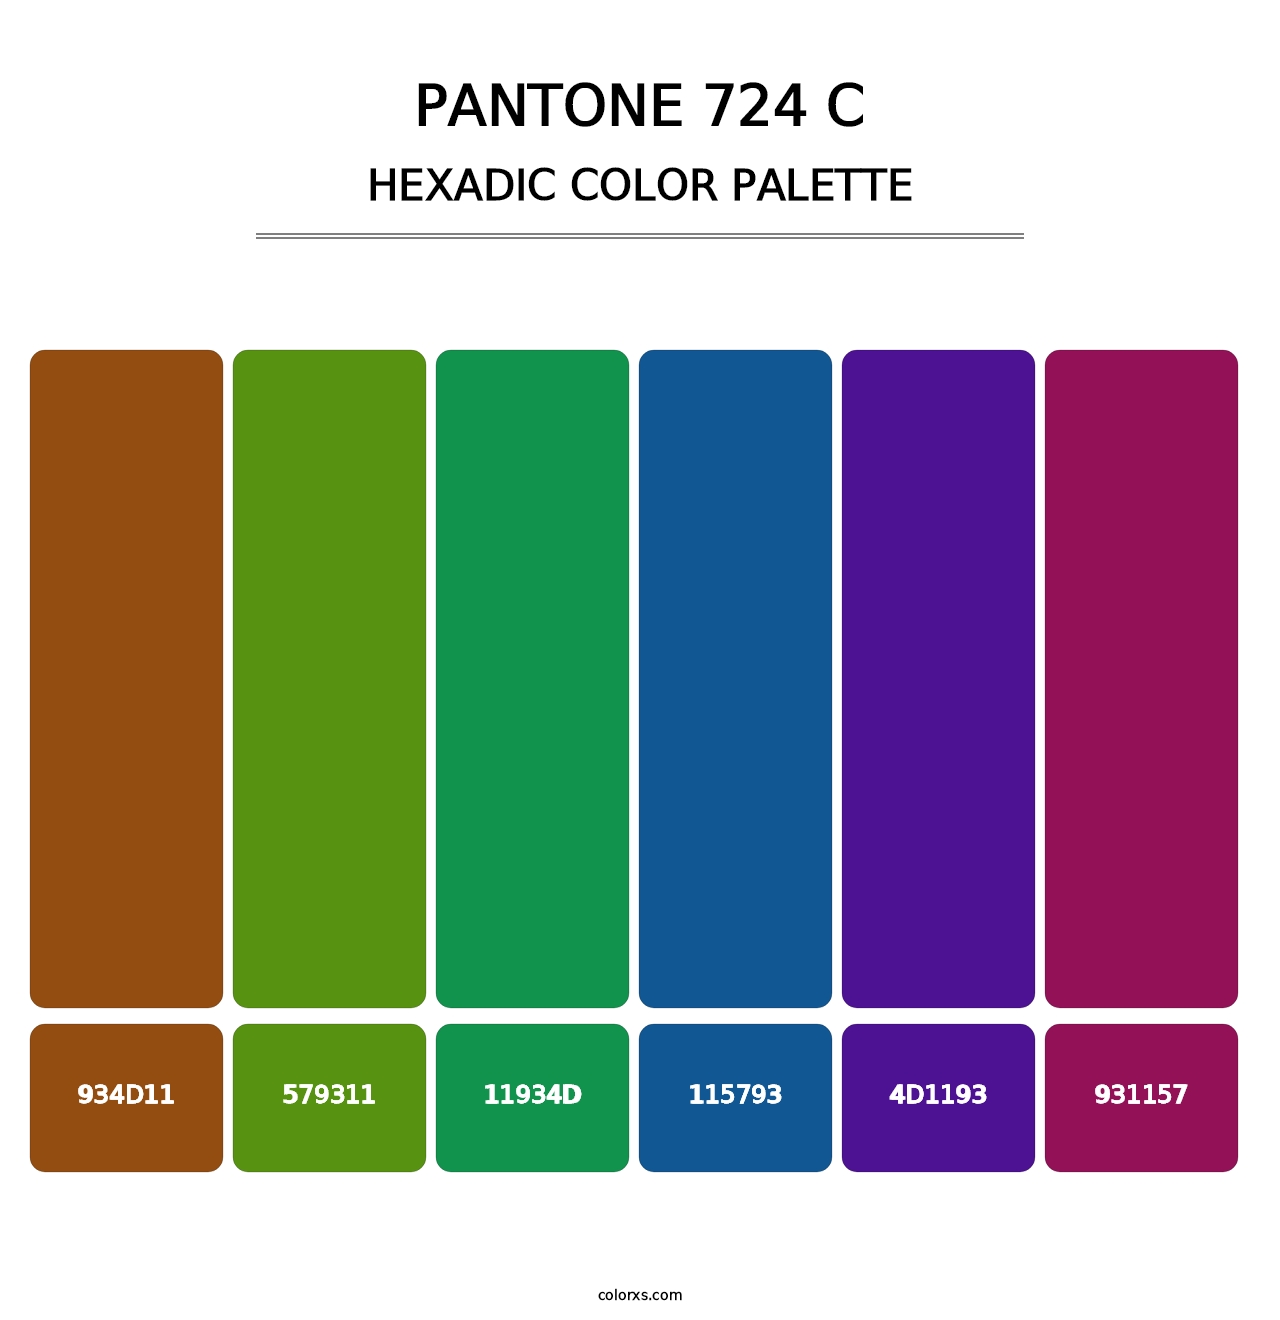 PANTONE 724 C - Hexadic Color Palette